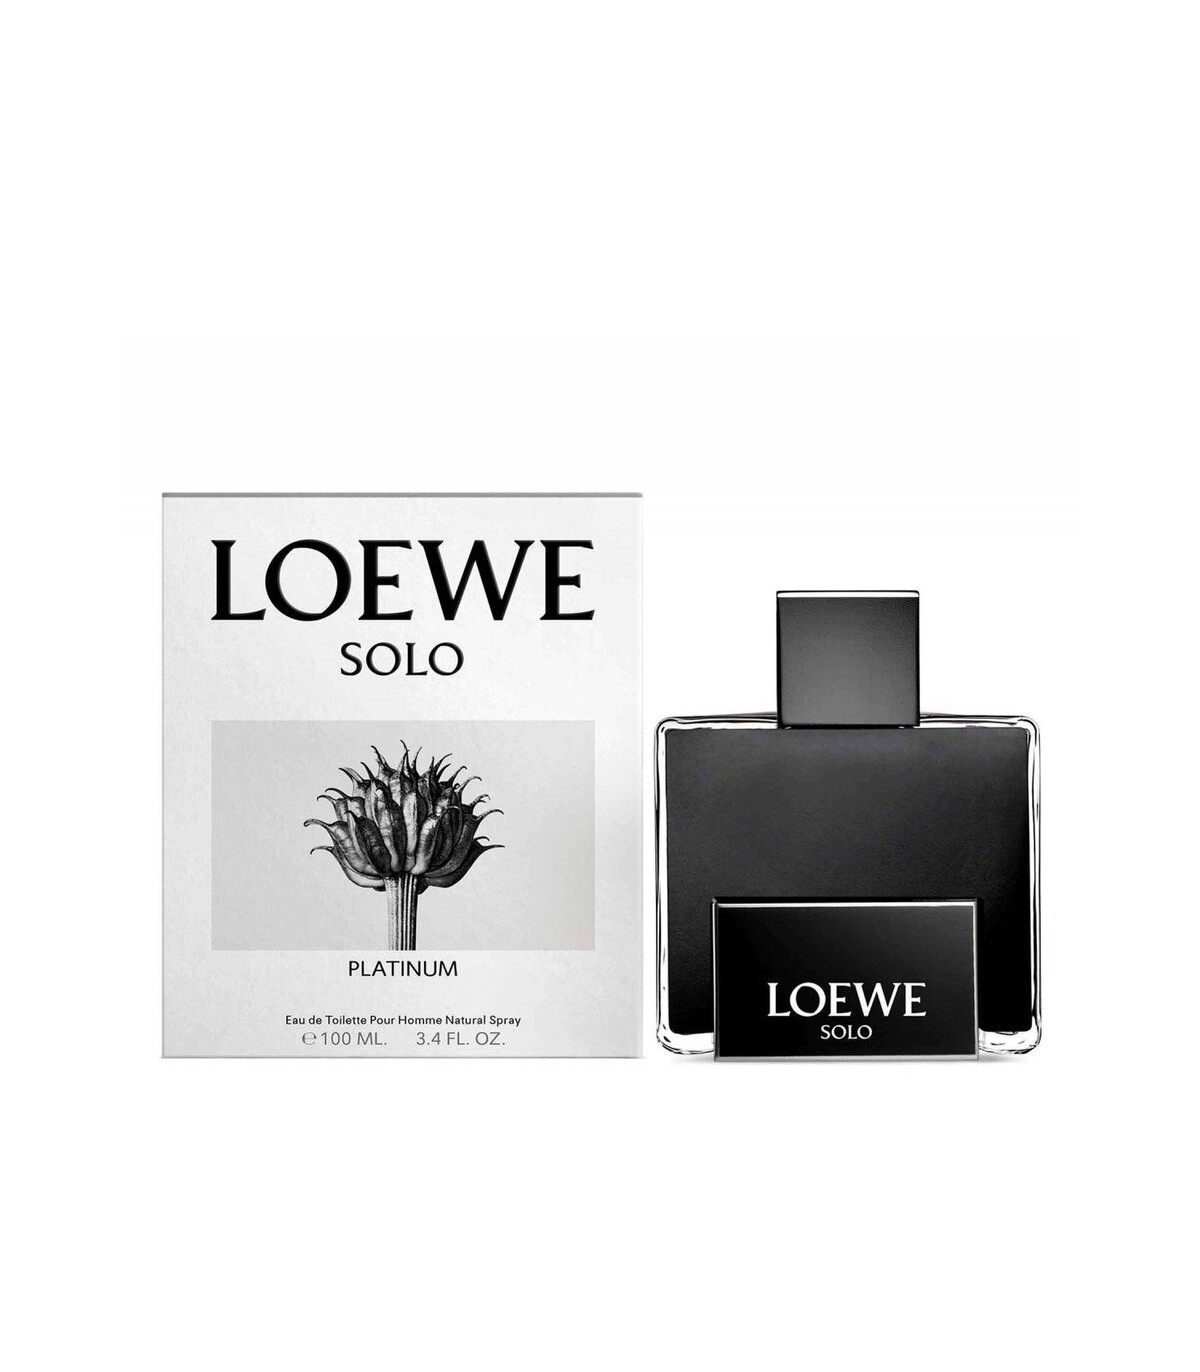 Solo loewe туалетная вода. Туалетная вода Loewe solo. Solo Loewe мужские. Духи Loewe Platinum. Solo Loewe Platinum.